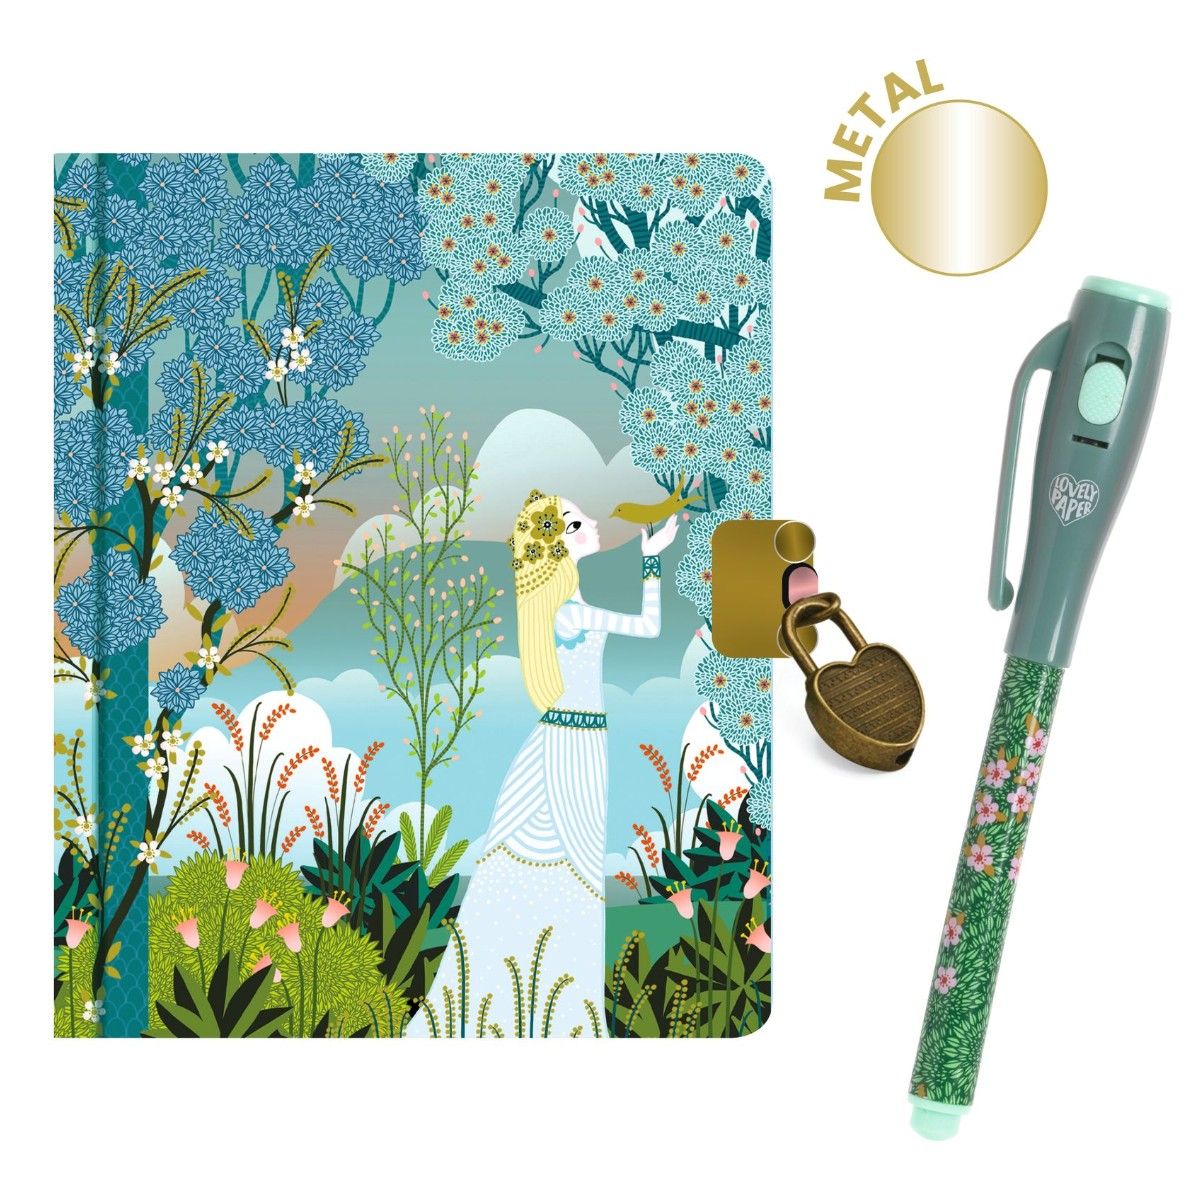 Djeco dagbog med lås og magisk pen i grøn og blå